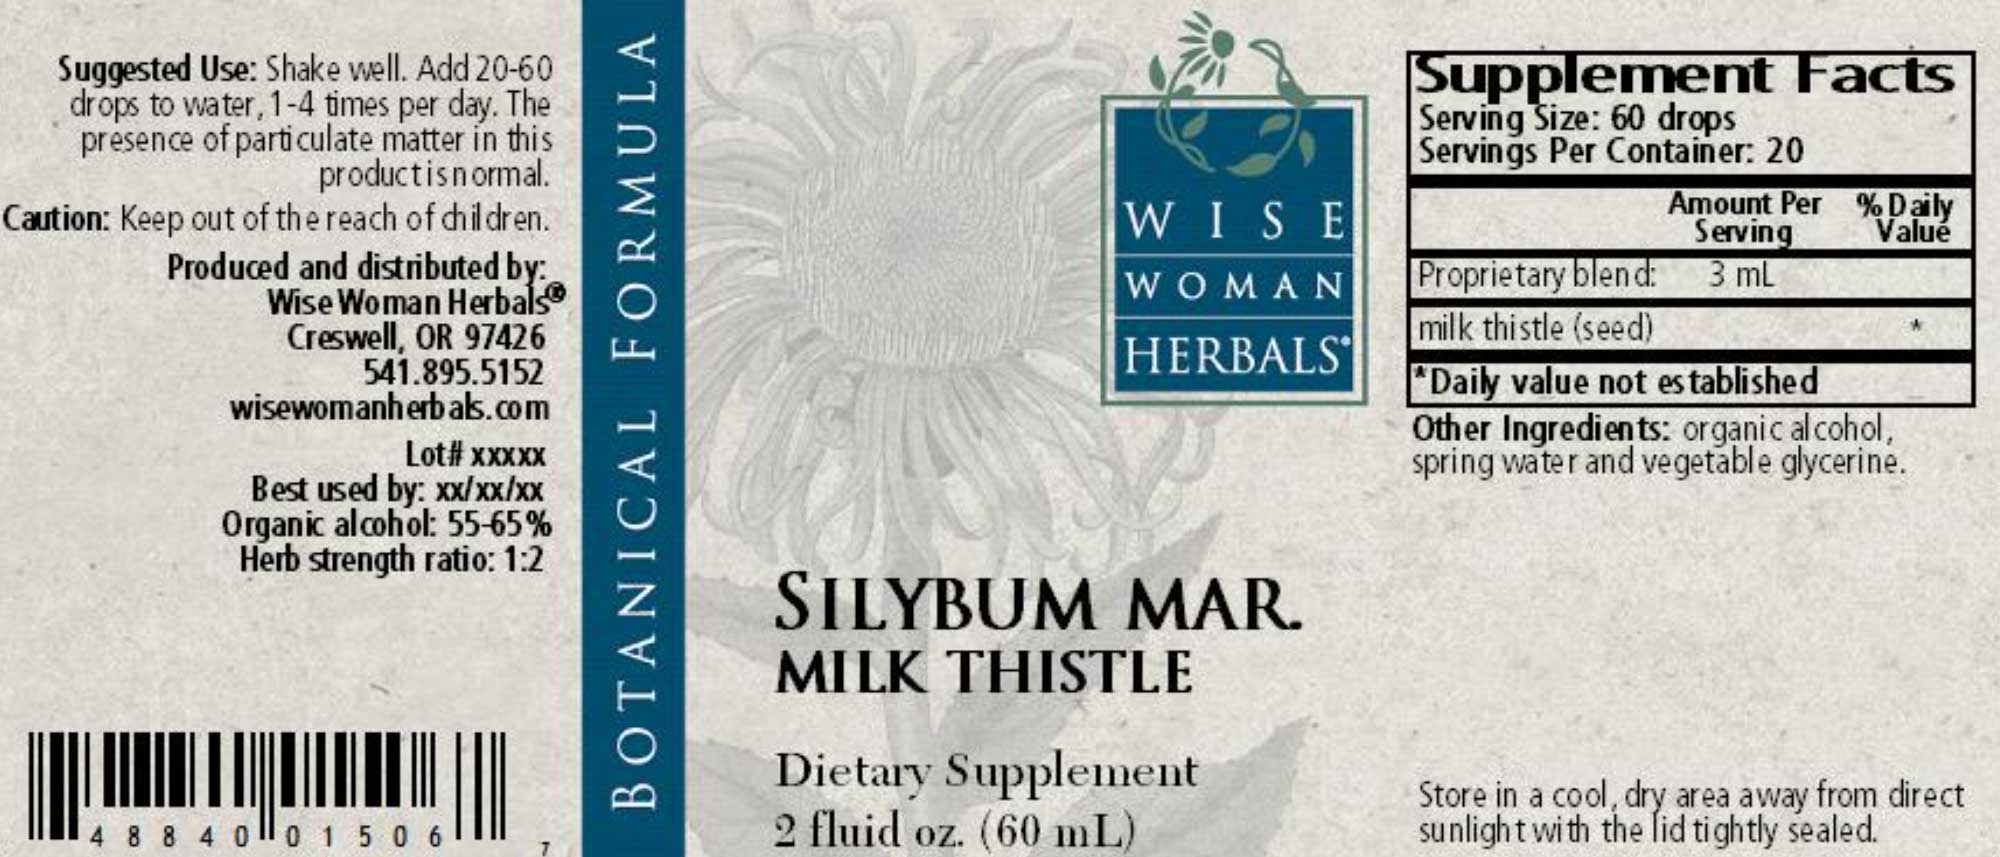 Wise Woman Herbals Silybum Marianum Milk Thistle Label